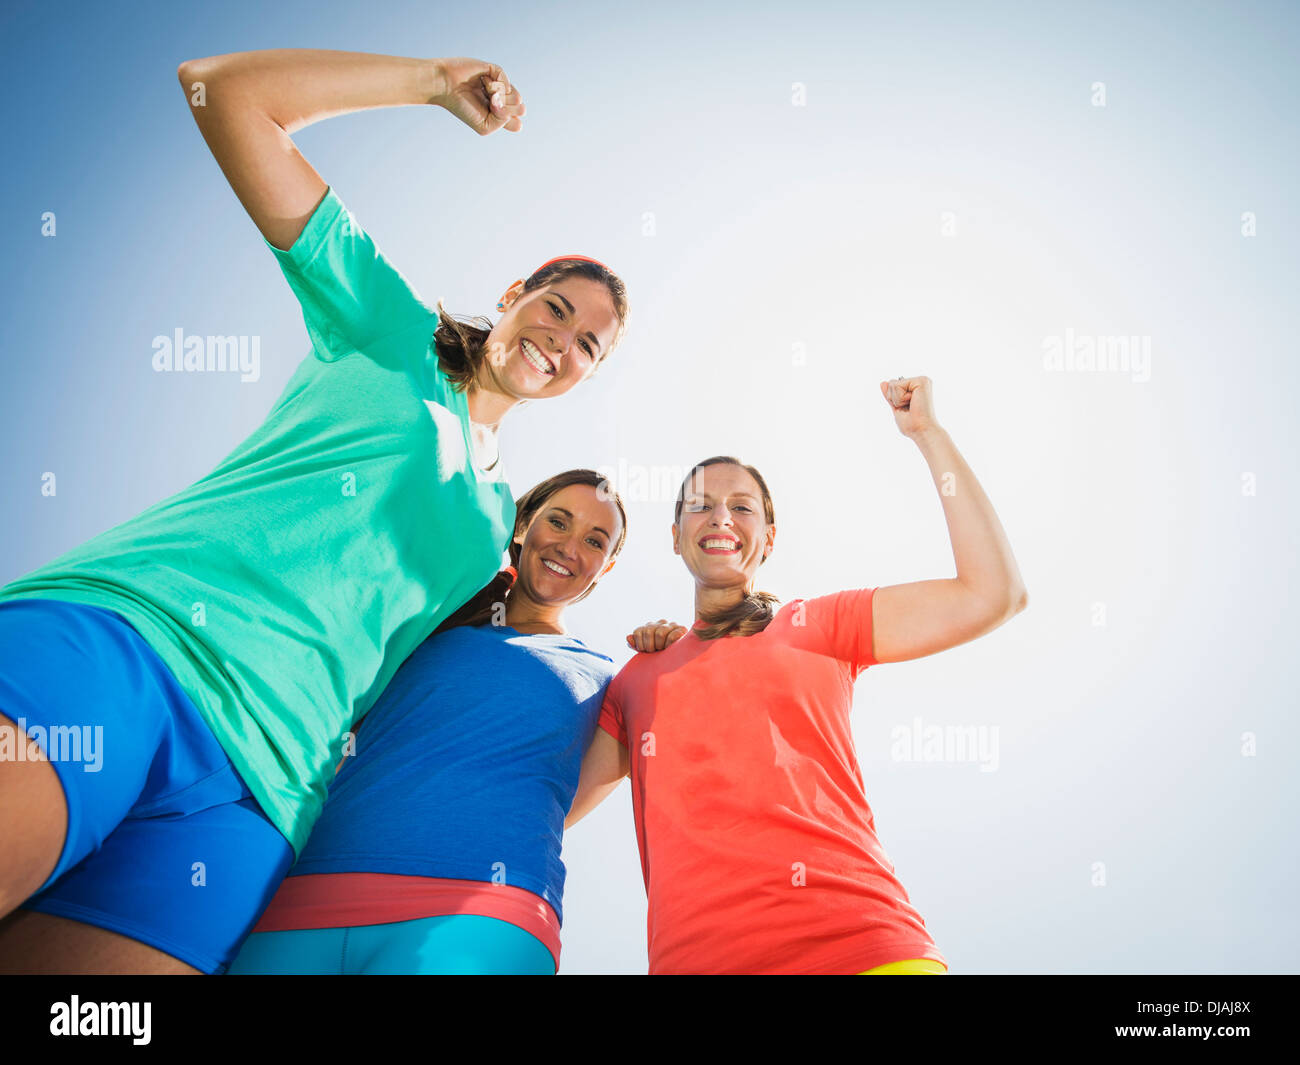 Caucasian women cheering outdoors Banque D'Images